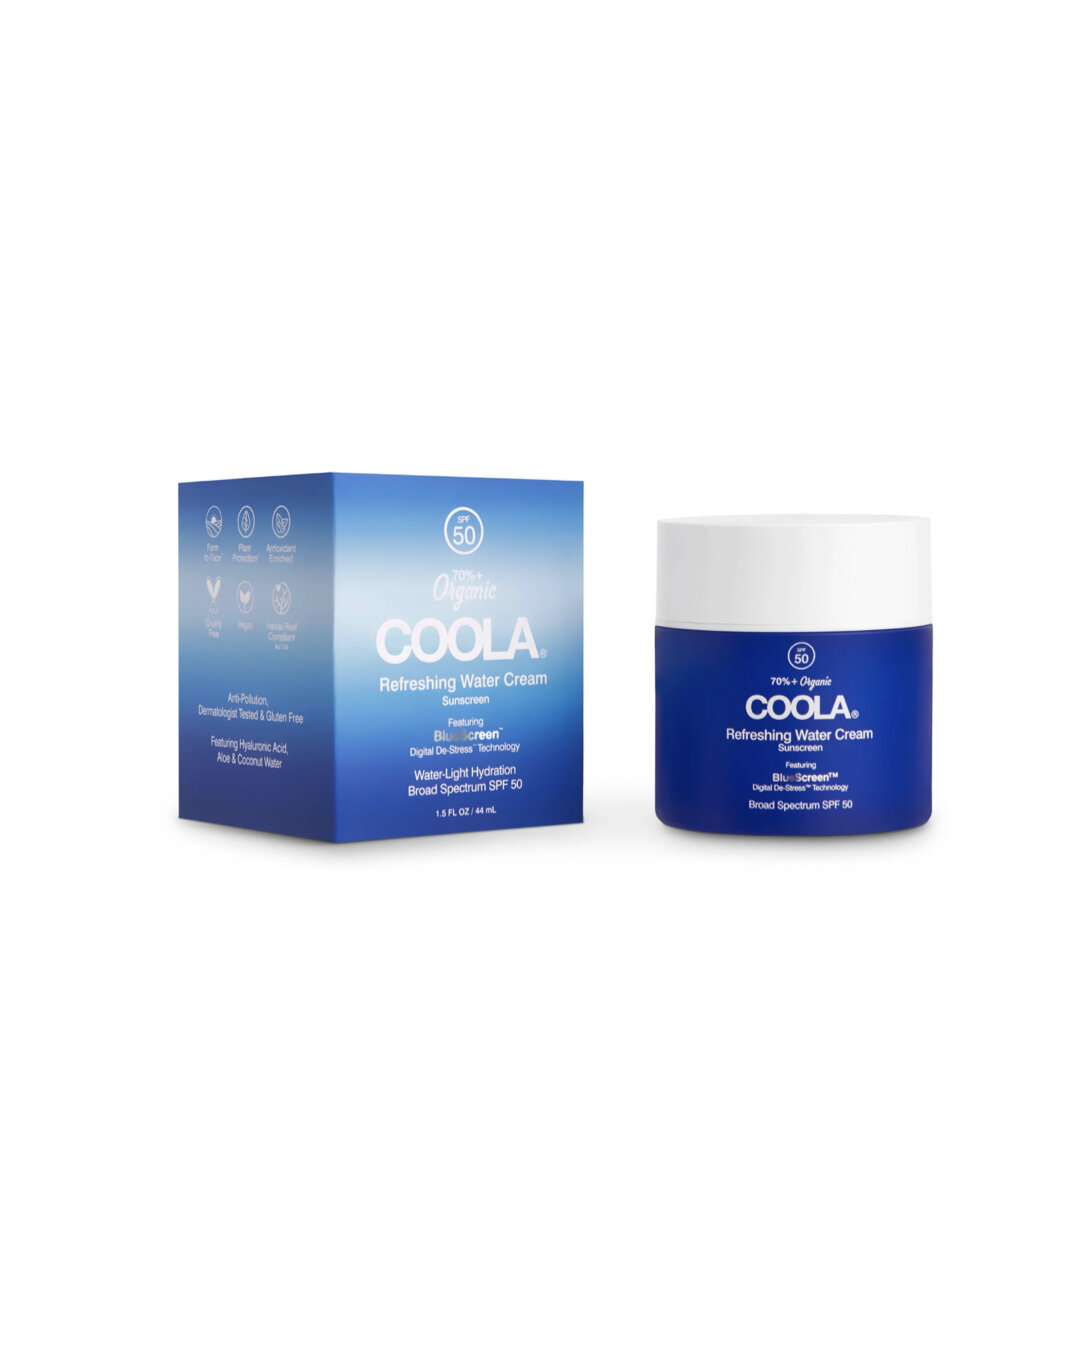 COOLA- Refreshing Water Cream